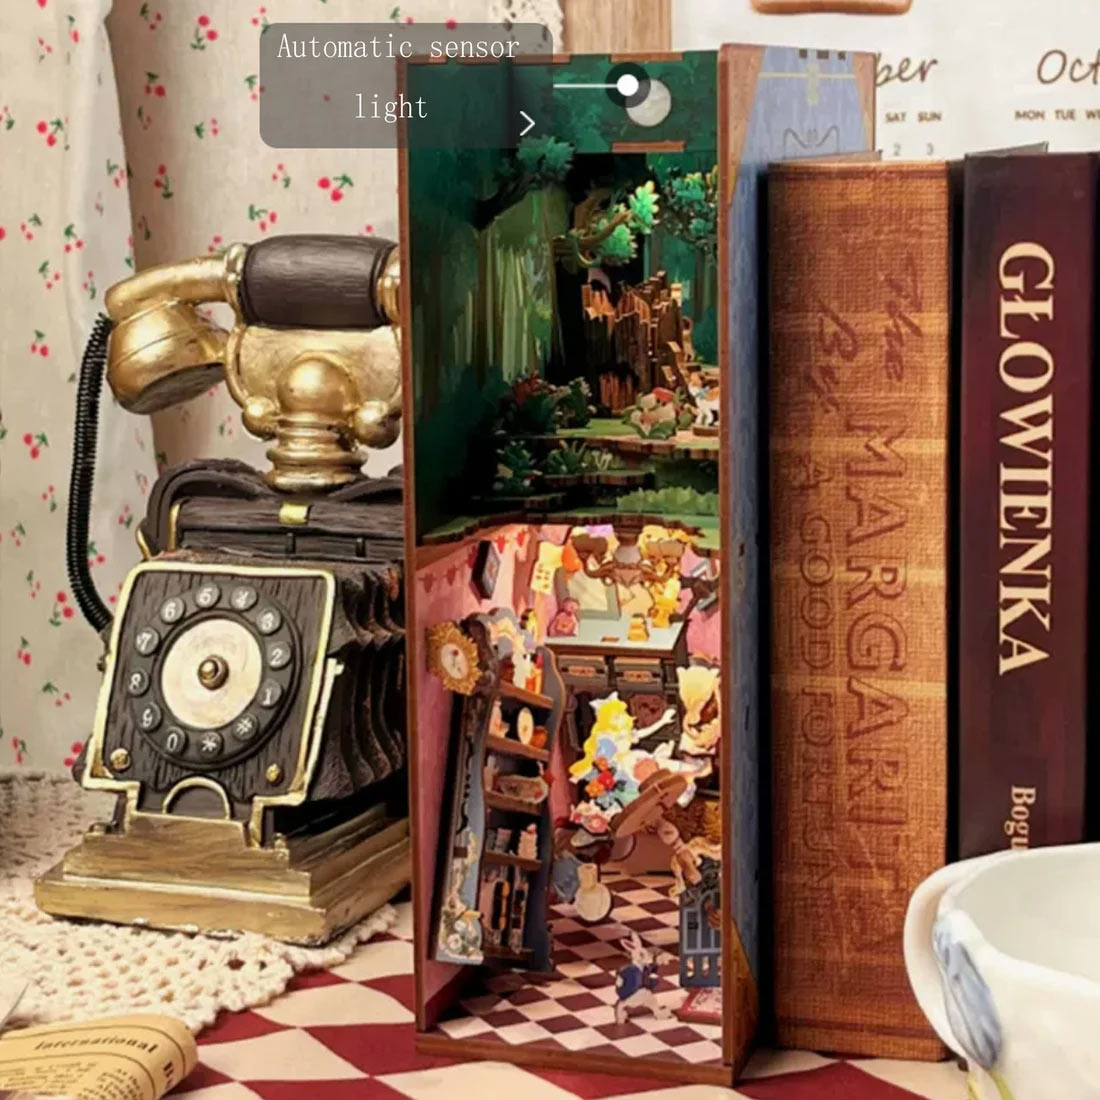 Alice in Wonderland DIY Book Nook Kit